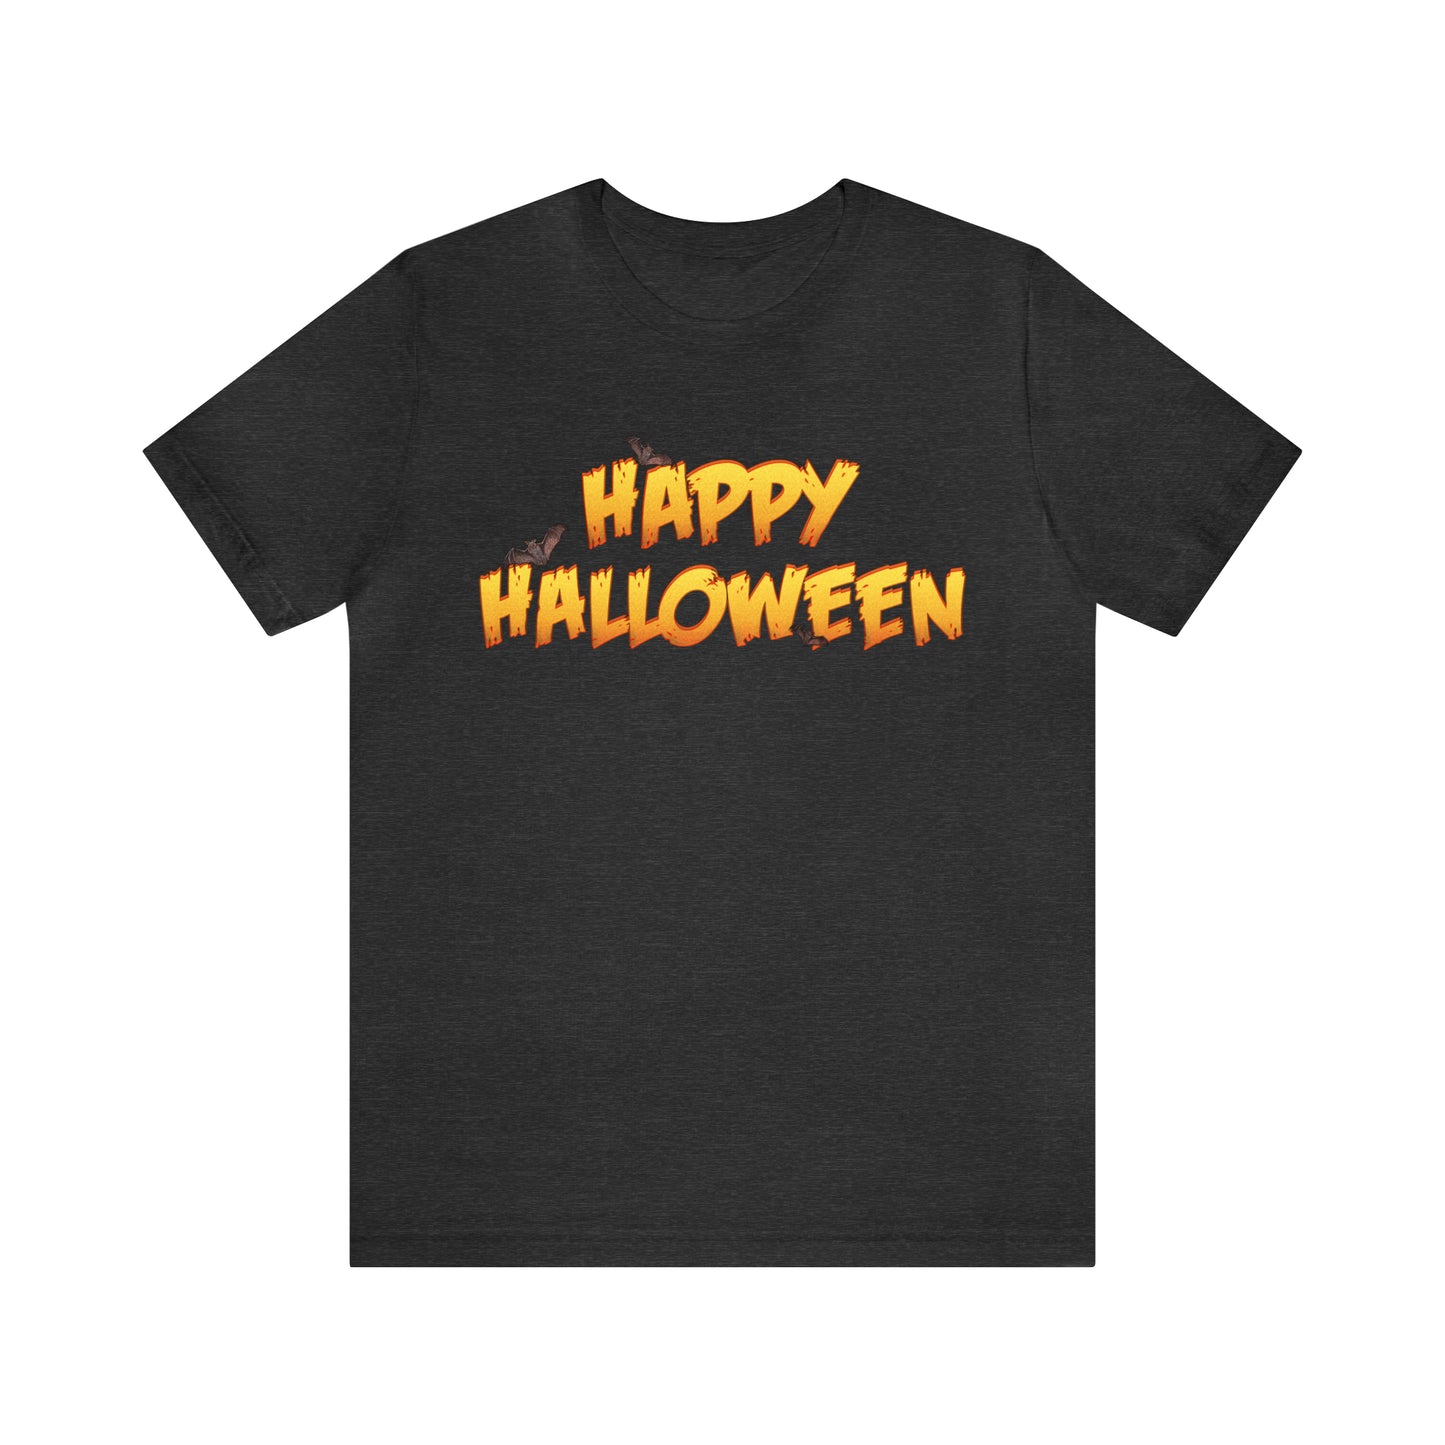 Happy Halloween Shirts, Halloween Shirts, Fall Shirts, Halloween Outfits, Halloween Funny Shirt, Funny Halloween Shirts, T838